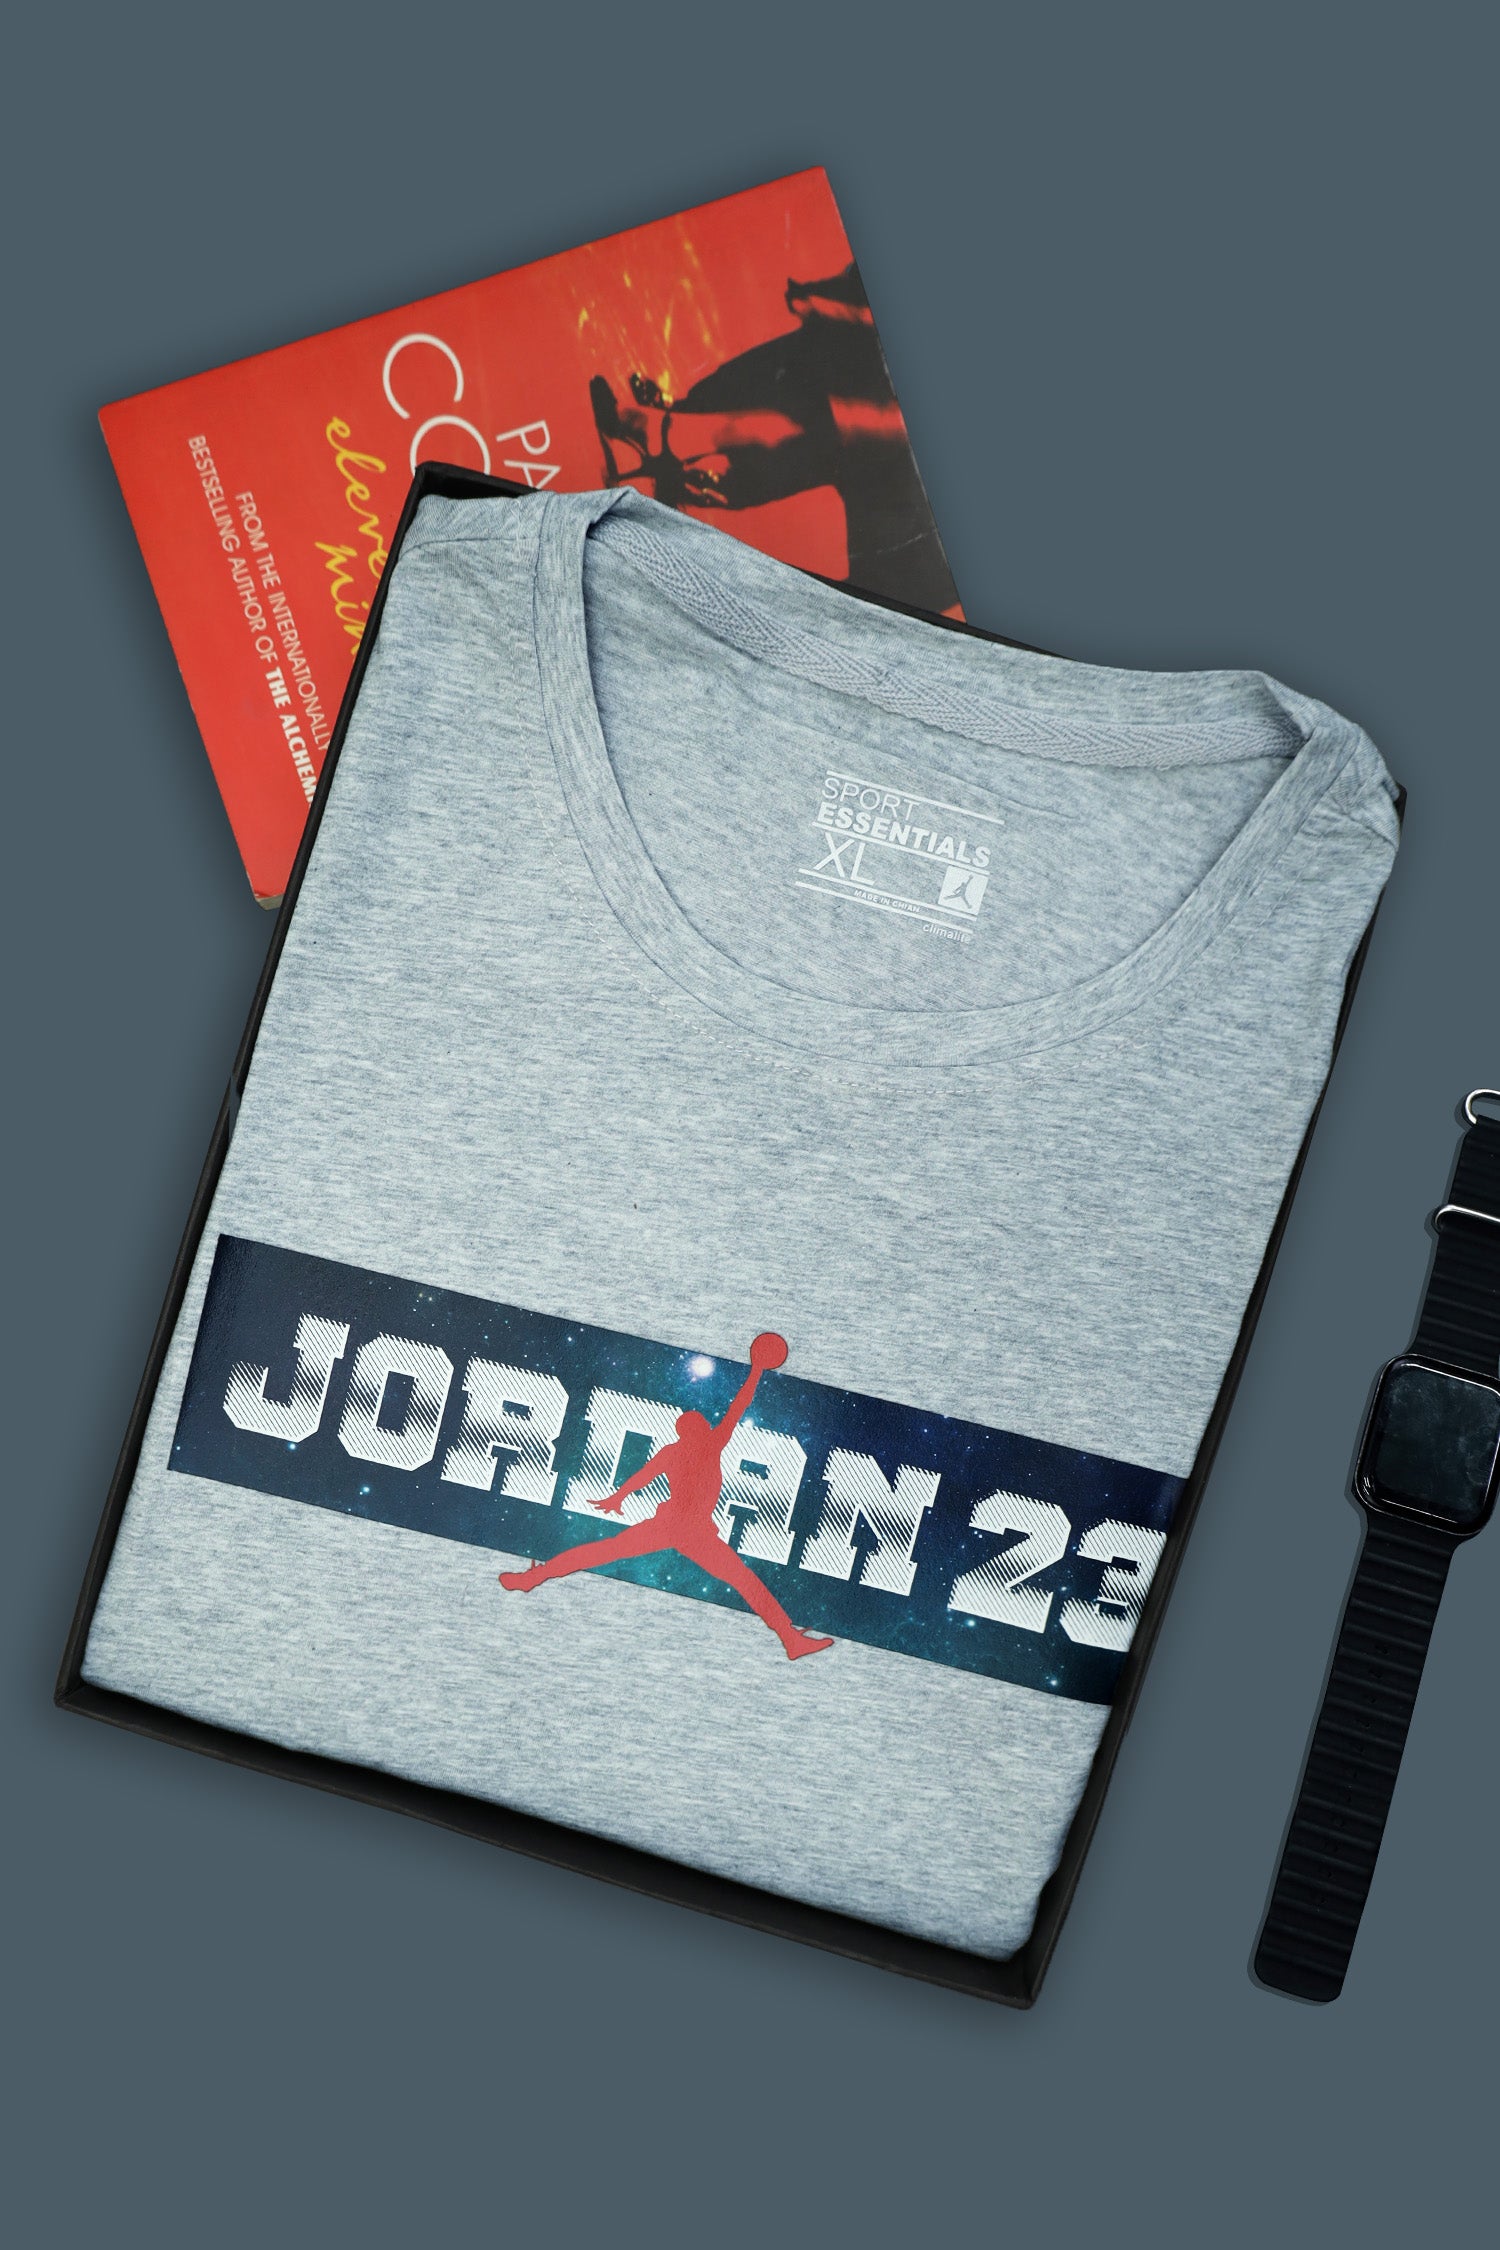 Jrdn Printed Logo Round Neck T-Shirt